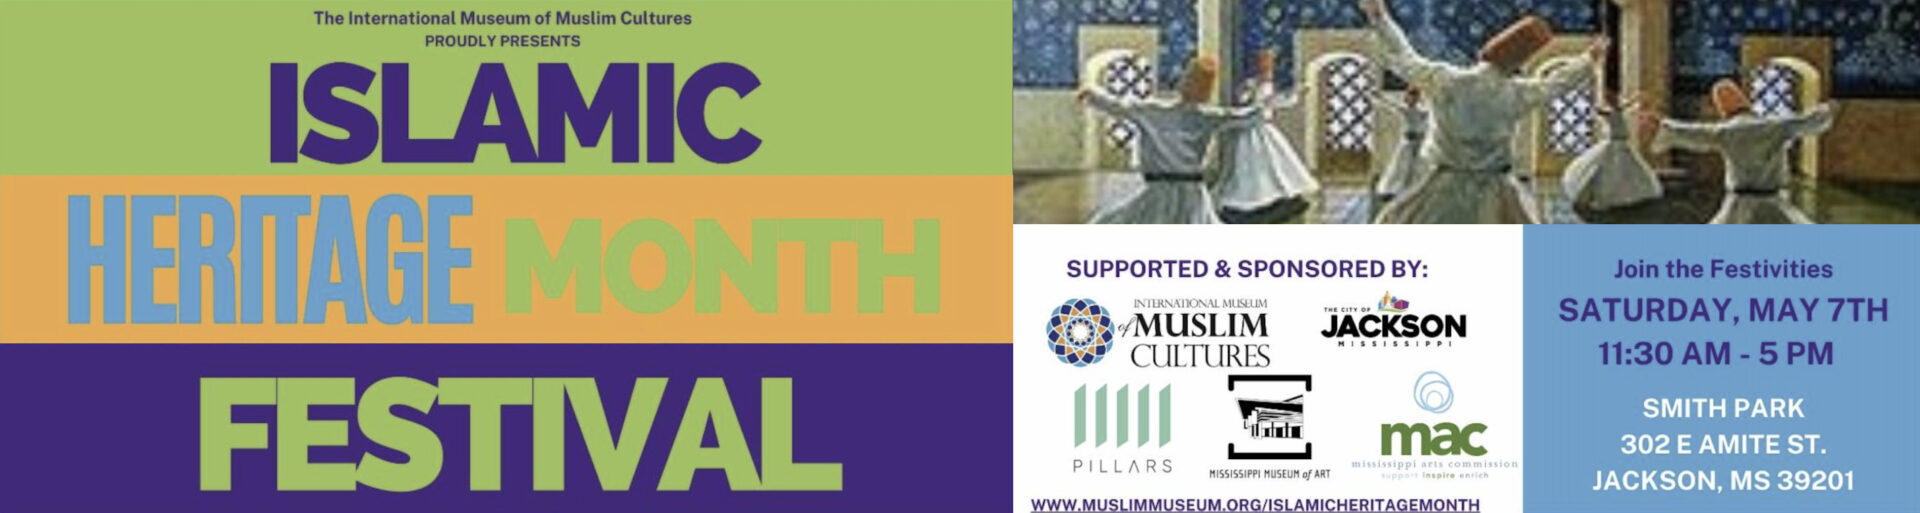 Islamic Heritage Month Festival | IMMC